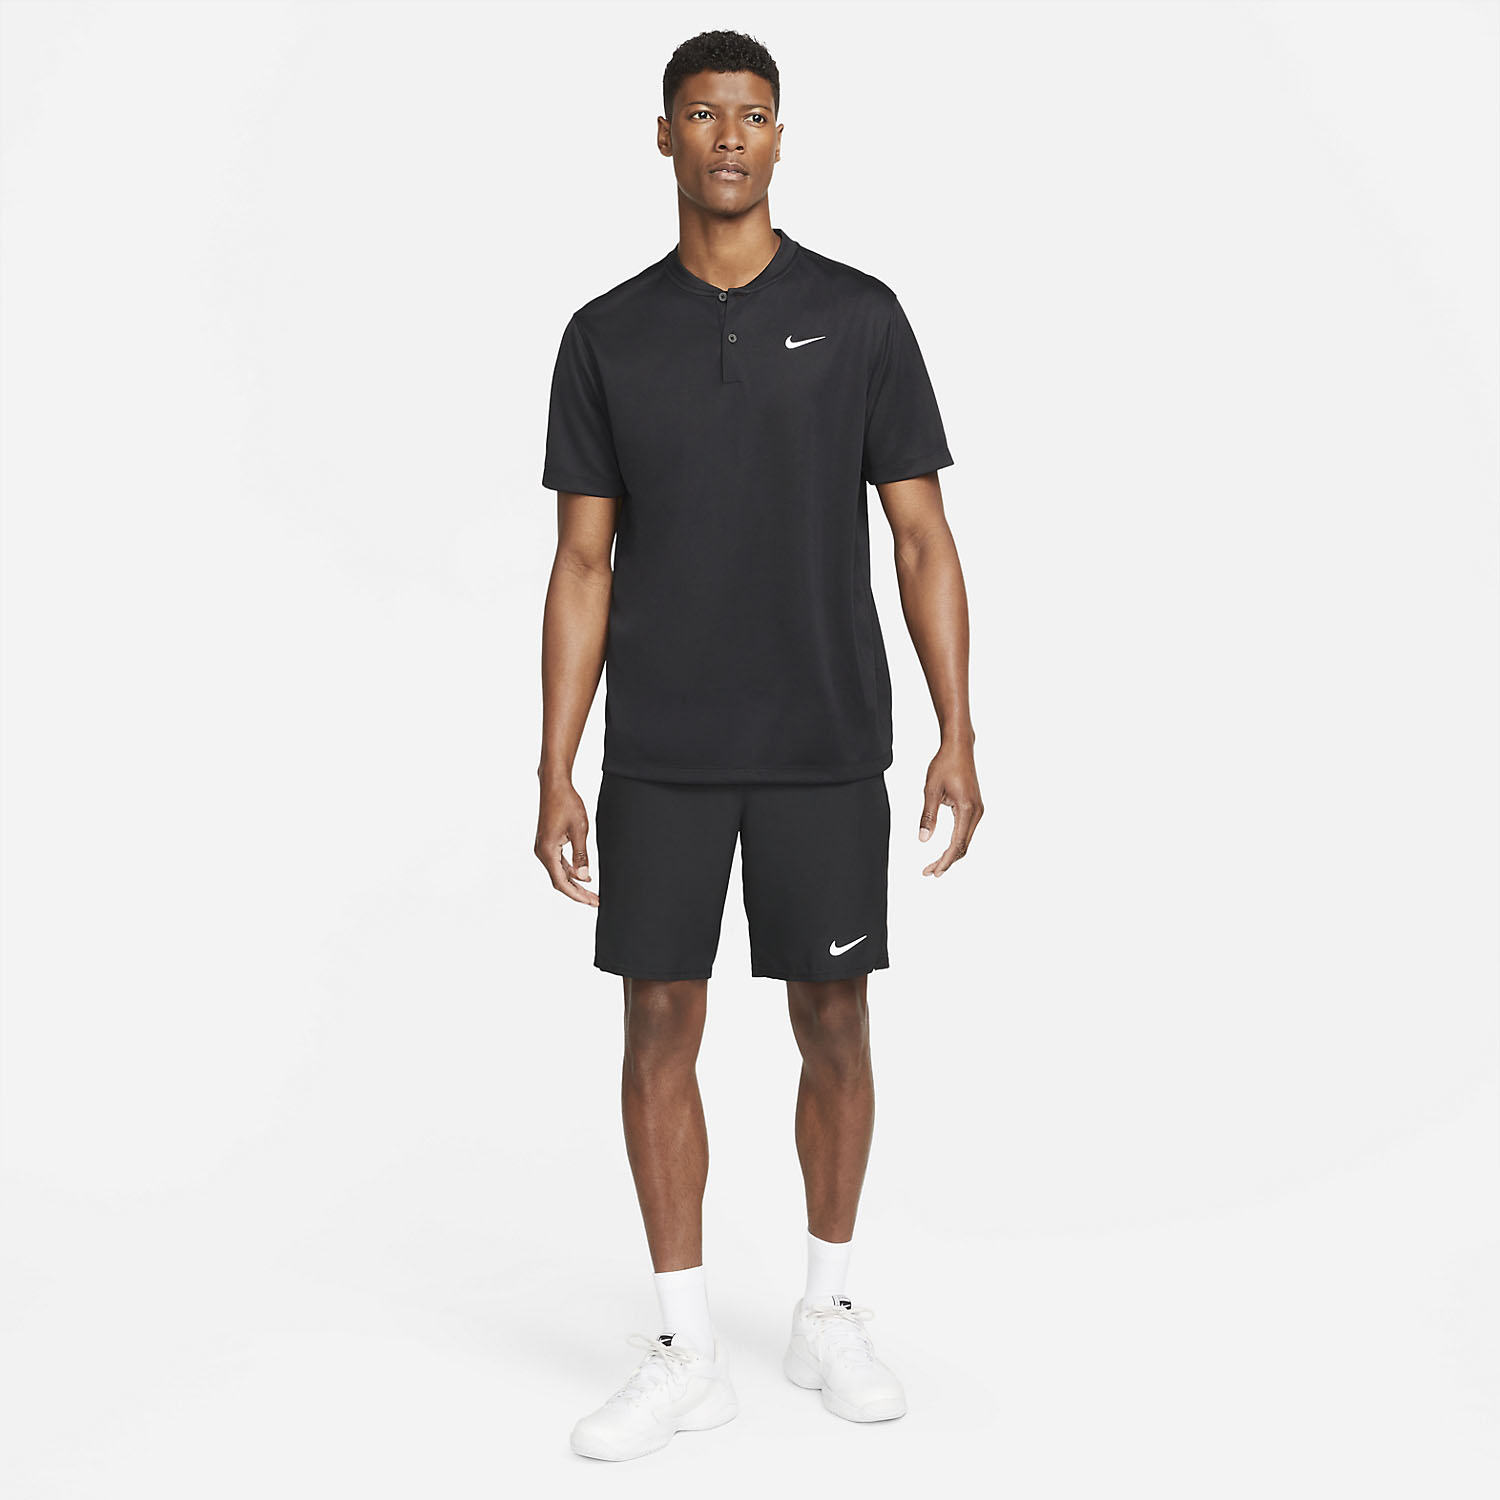 Nike Dri-FIT Blade Solid Men's Tennis Polo - Black/White